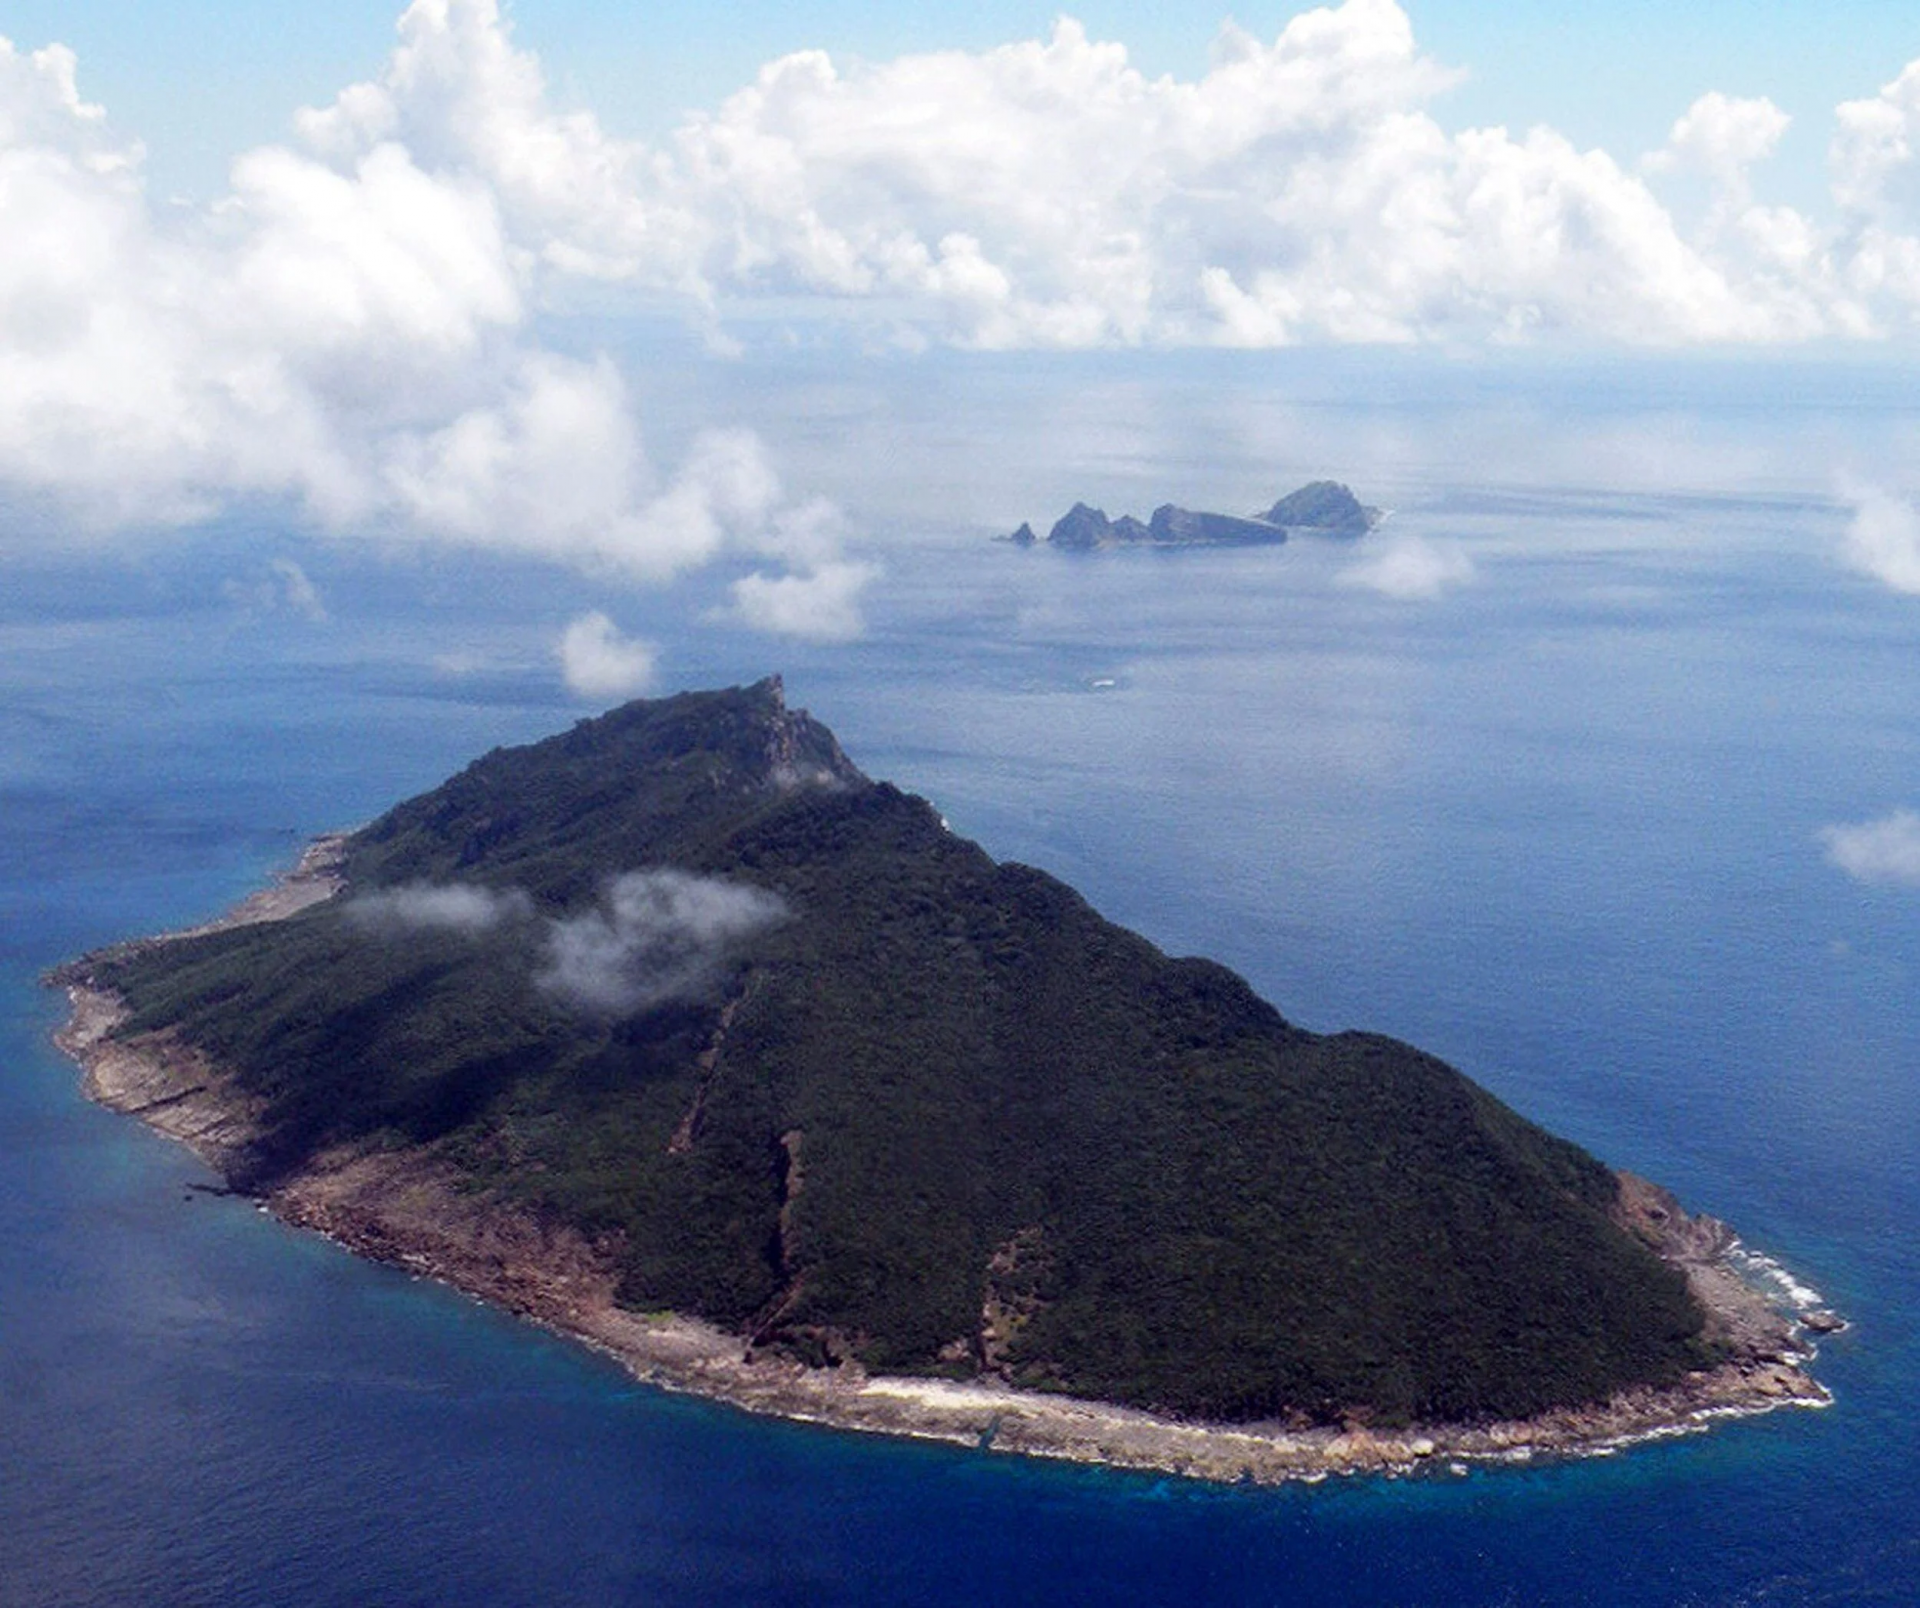 east china sea japan asks to take down digital museum on disputed island